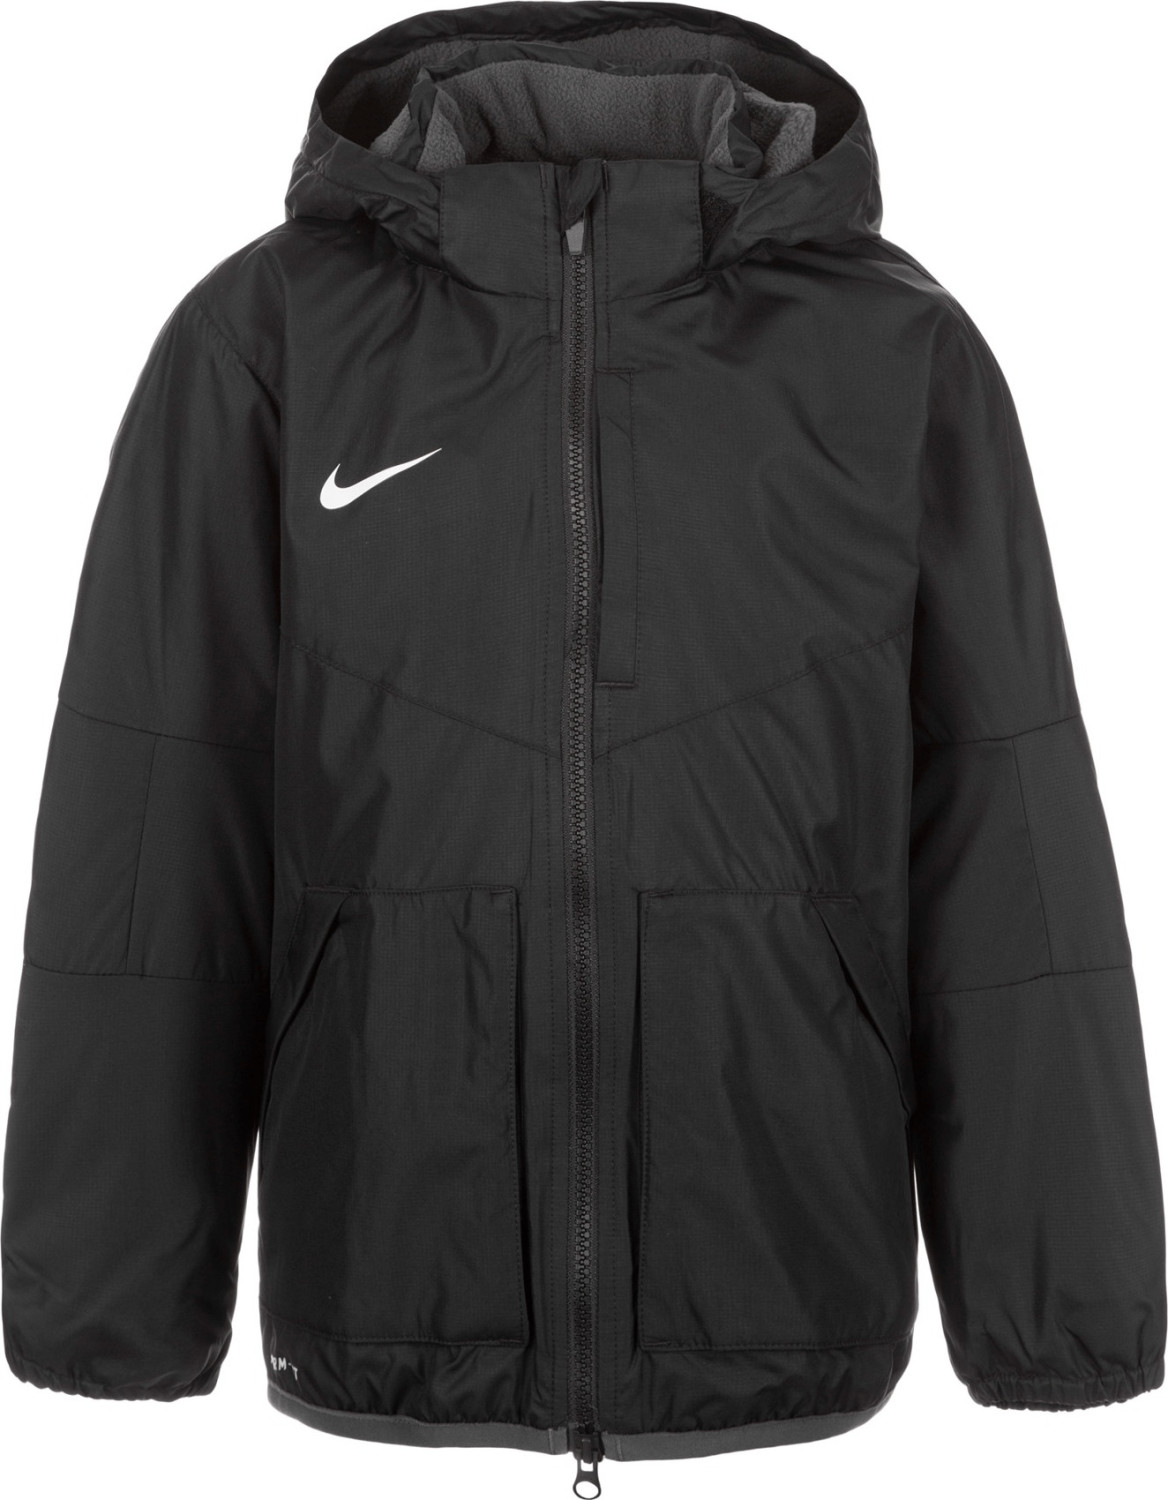 Nike Team Winter Stadium Jacket Youth black (645905)